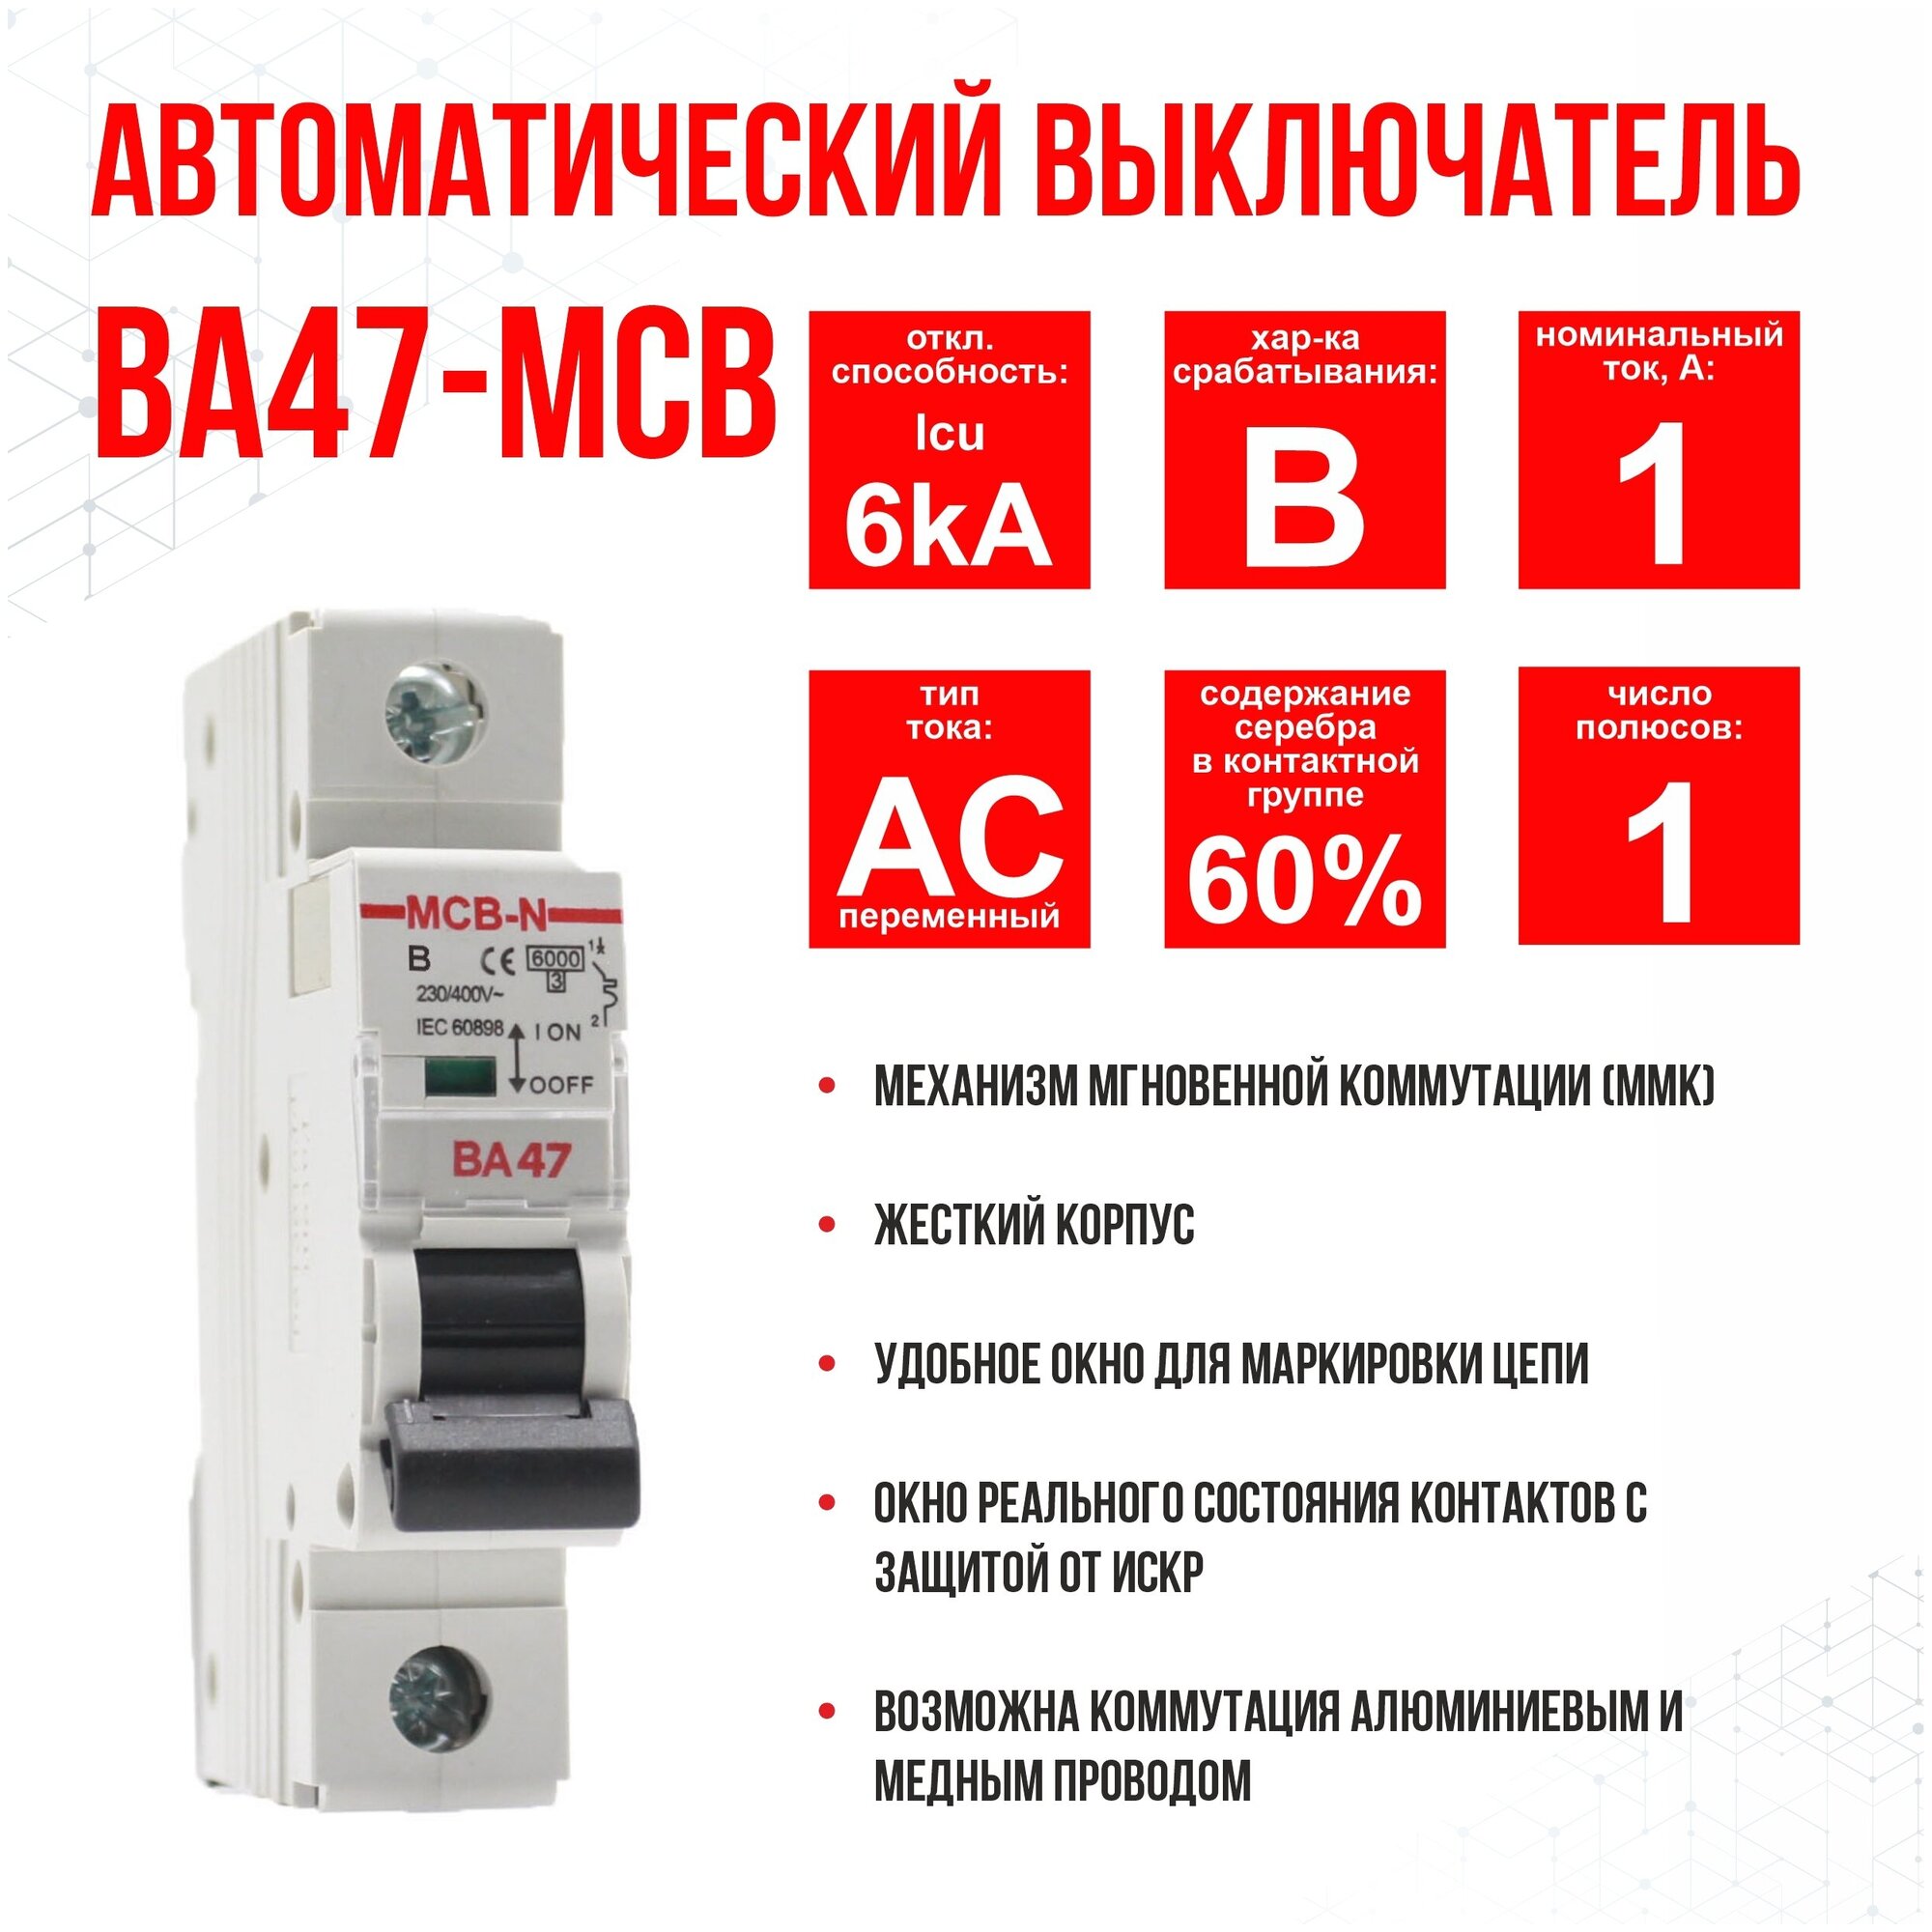 Выключатель автоматический AKEL ВА47-MCB-N-1P-B1-AC, 1 шт.